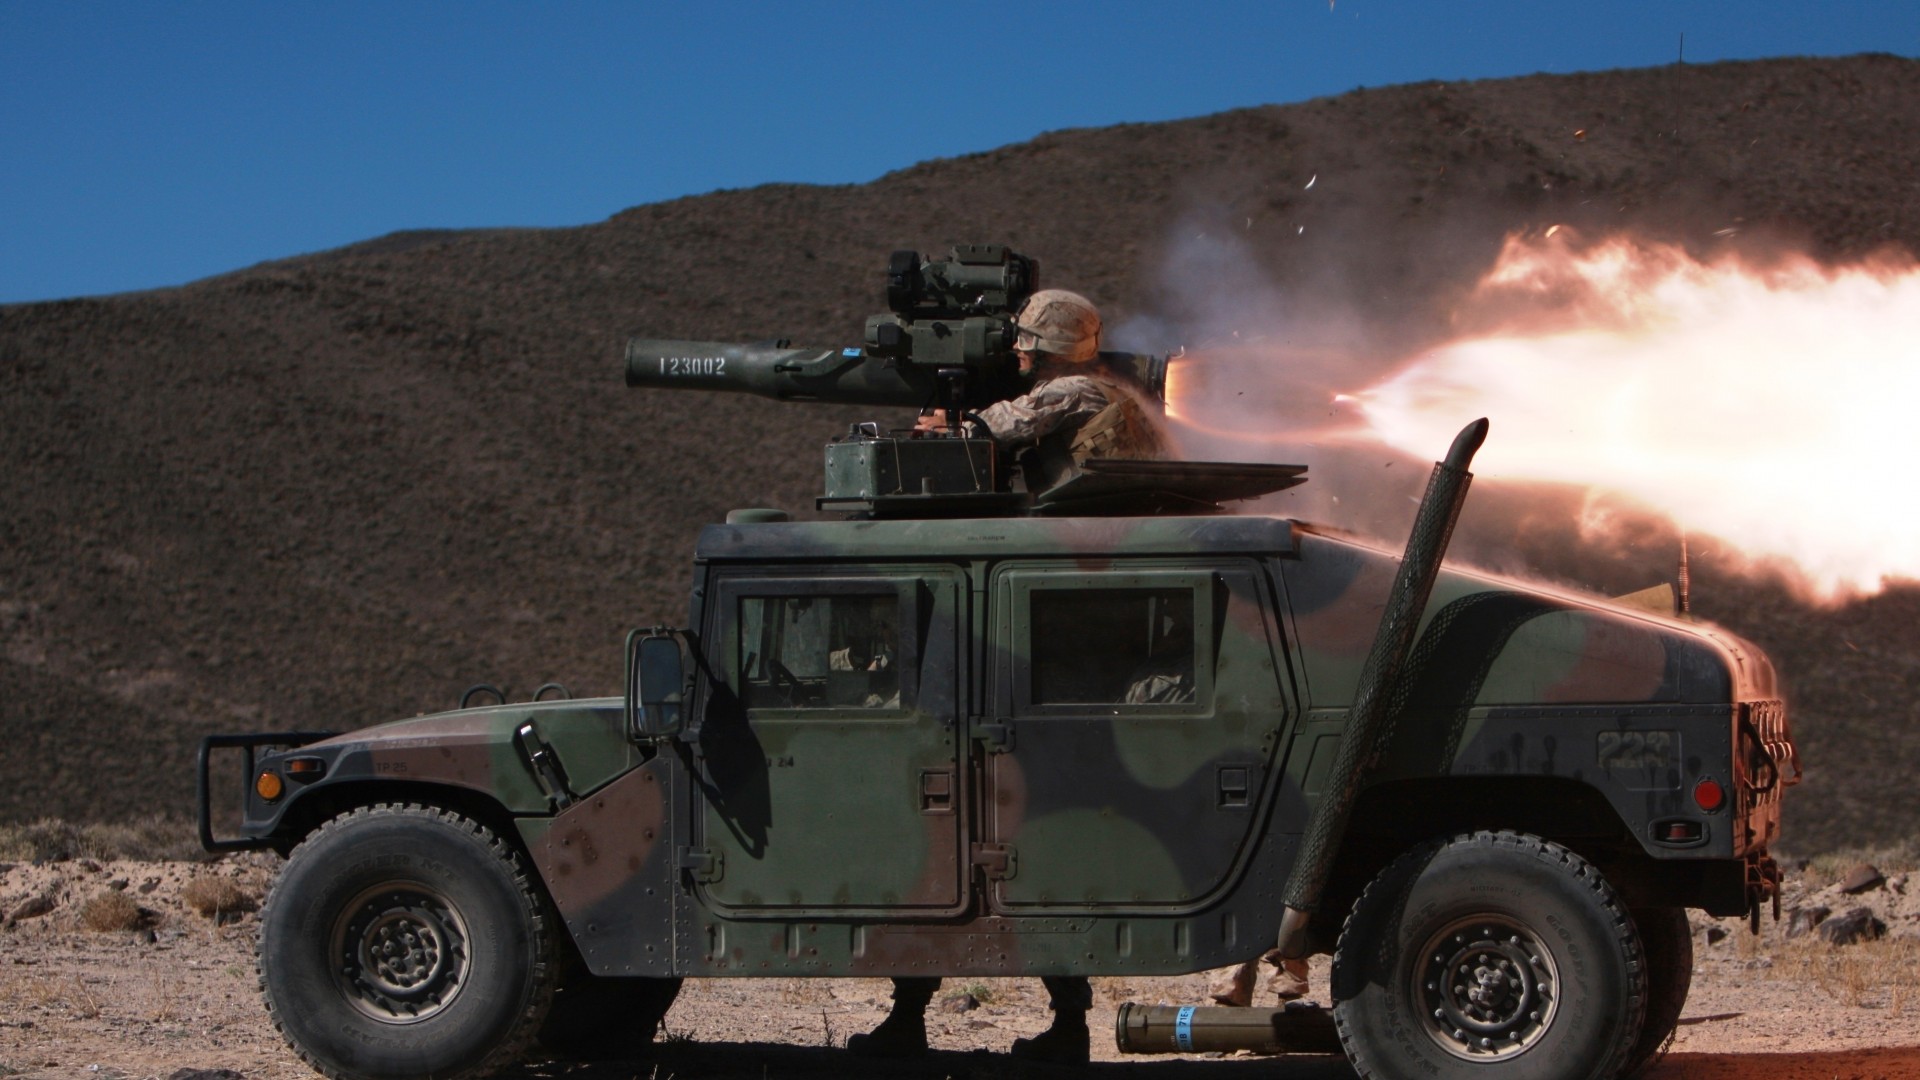 Humvee, HMMWV, SUV, rocket launch, soldier, U.S. Army (horizontal)